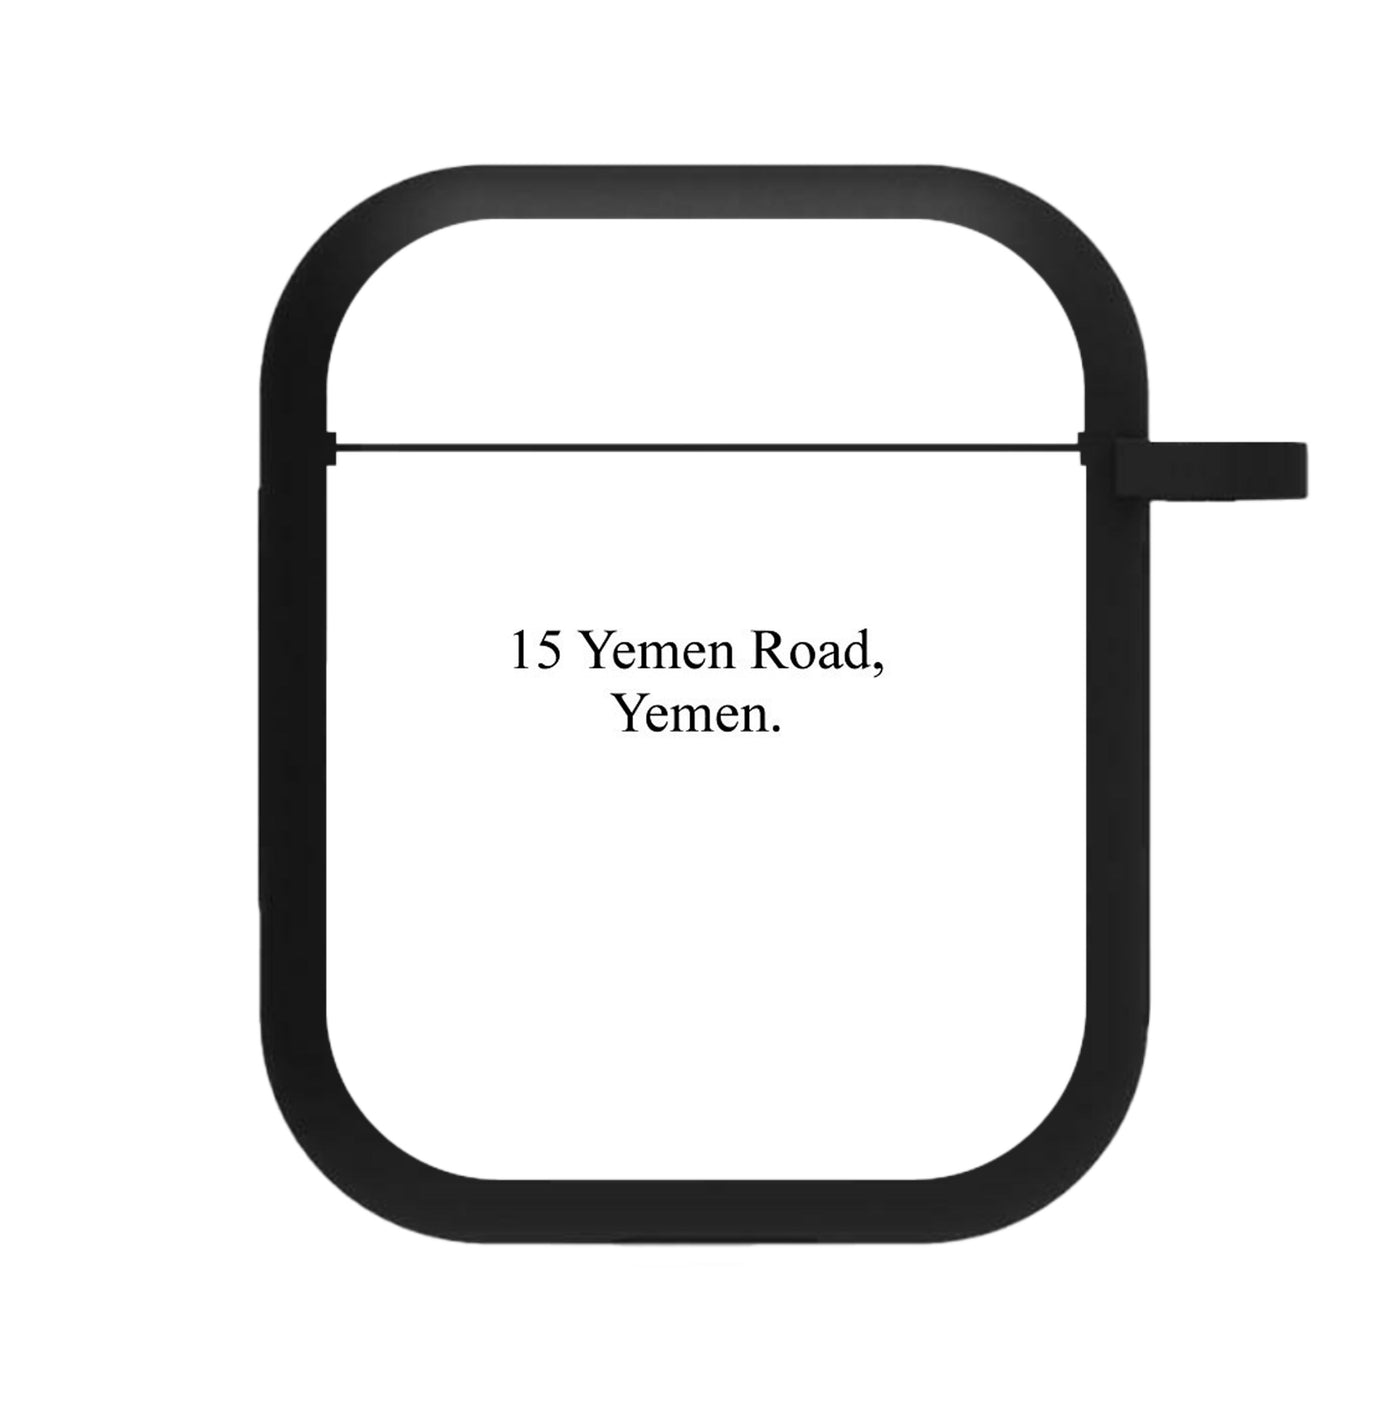 15 Yemen Road, Yemen - Friends AirPods Case